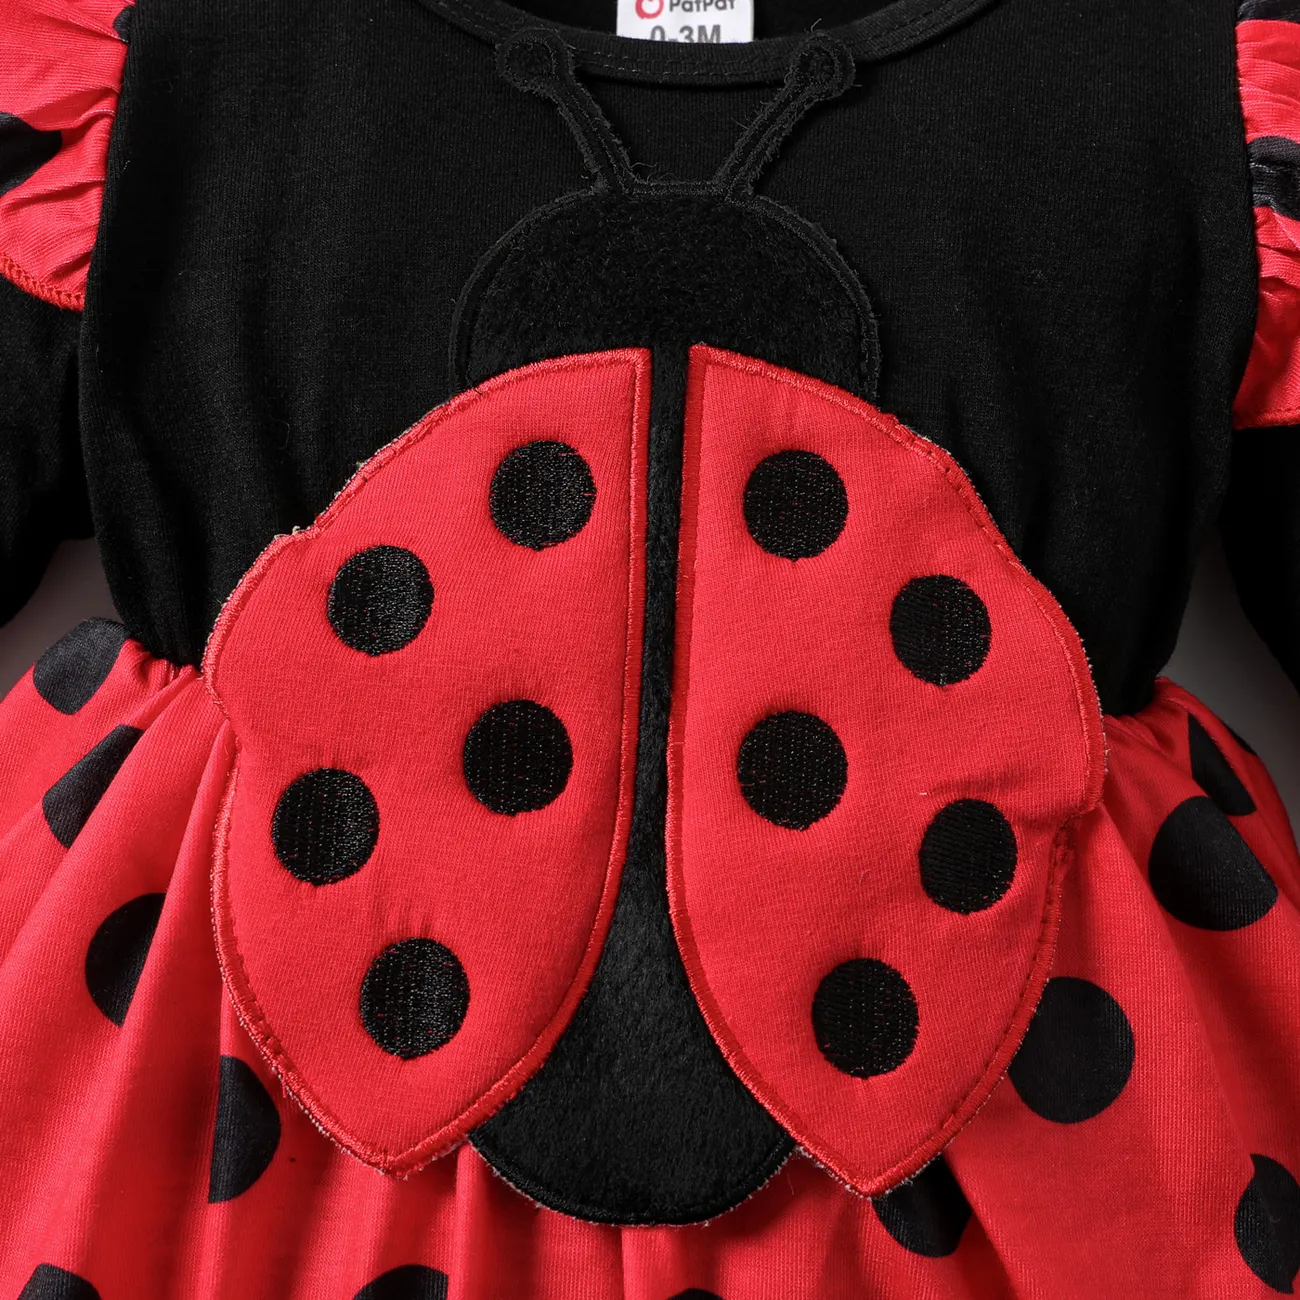 2pcs Baby Girls Childlike Polka Dot Ladybug Romper Set Red big image 1